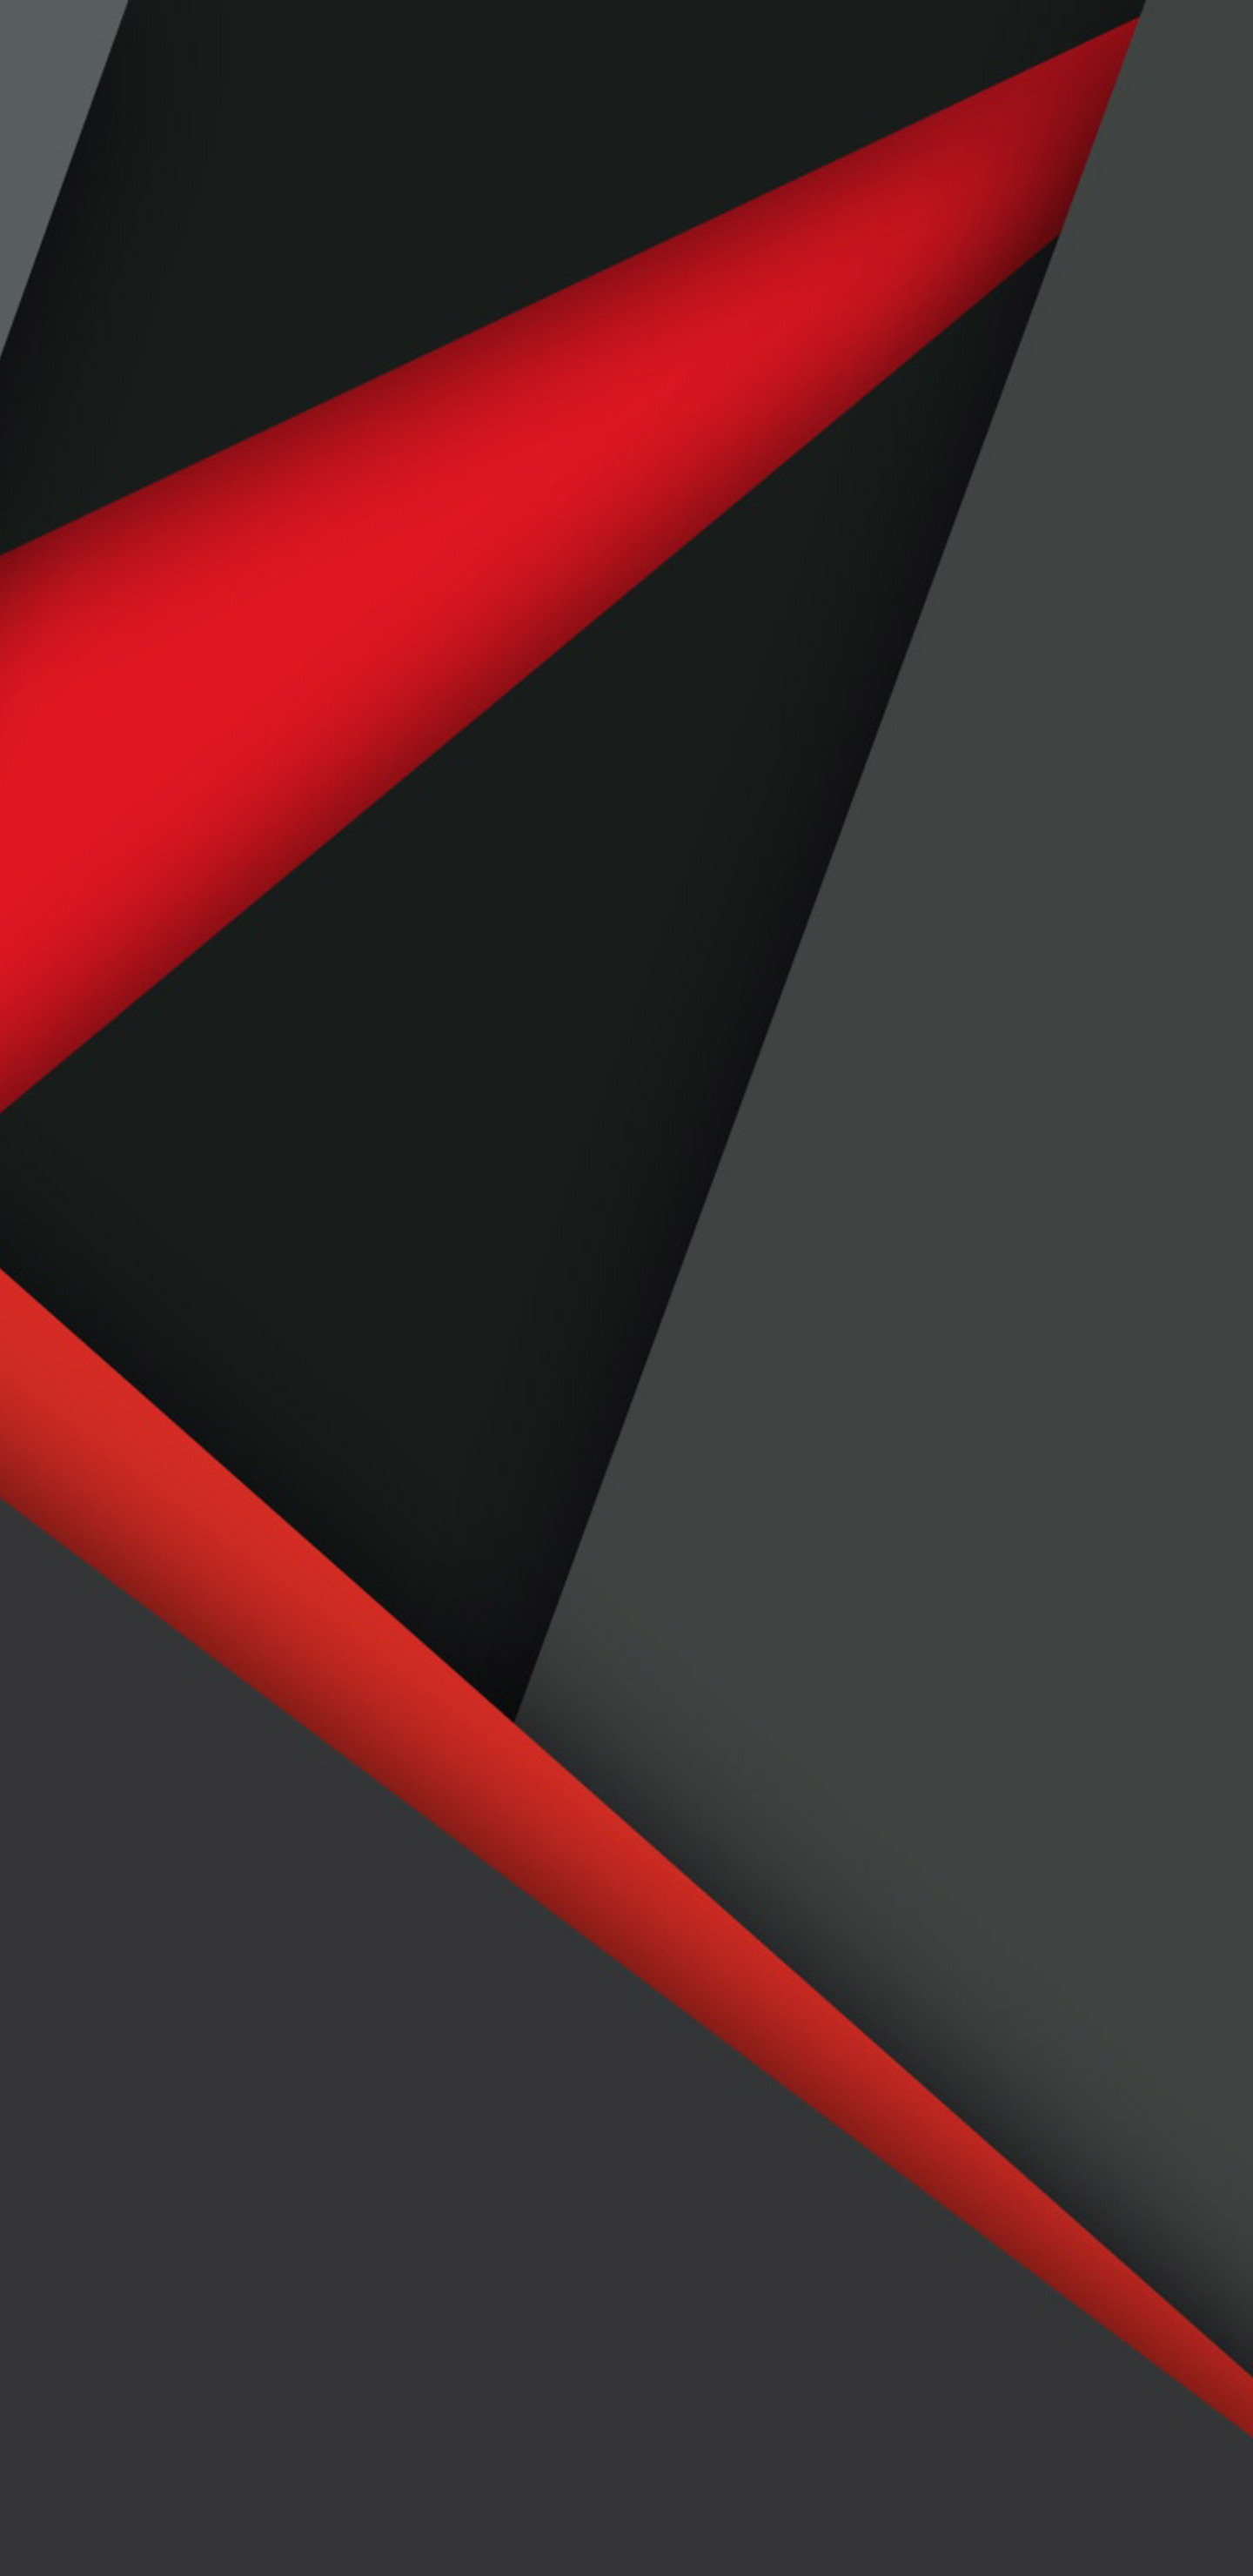 1440x2960 Material Design Dark Red Black Samsung Galaxy Note 9 8